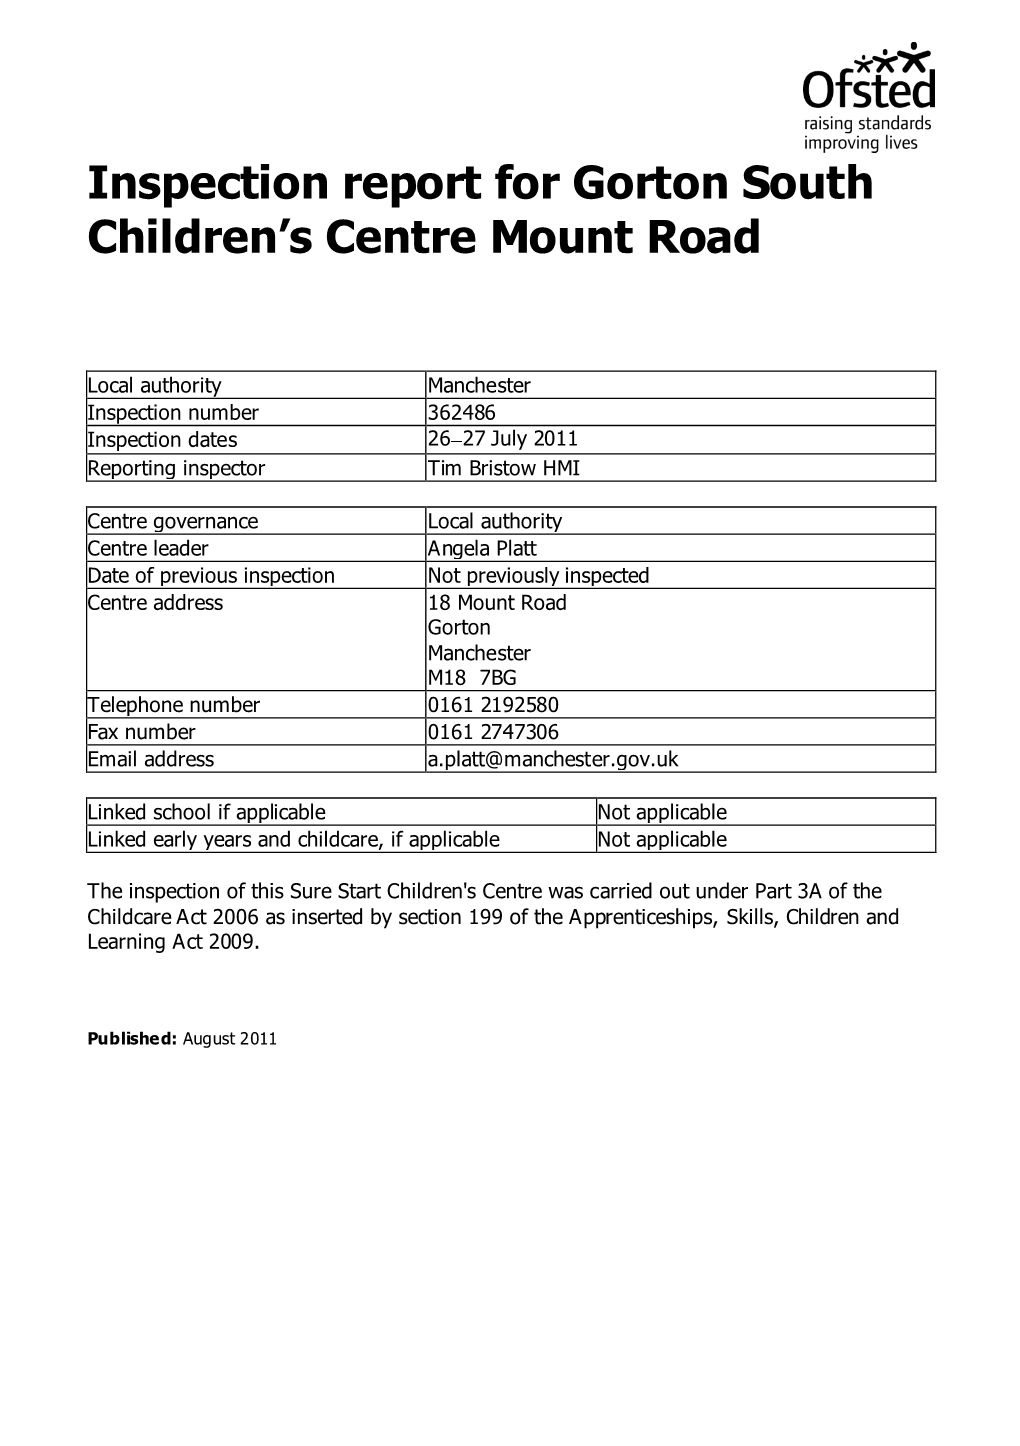 Inspection Report for Gorton South Children's Centre Mount Road